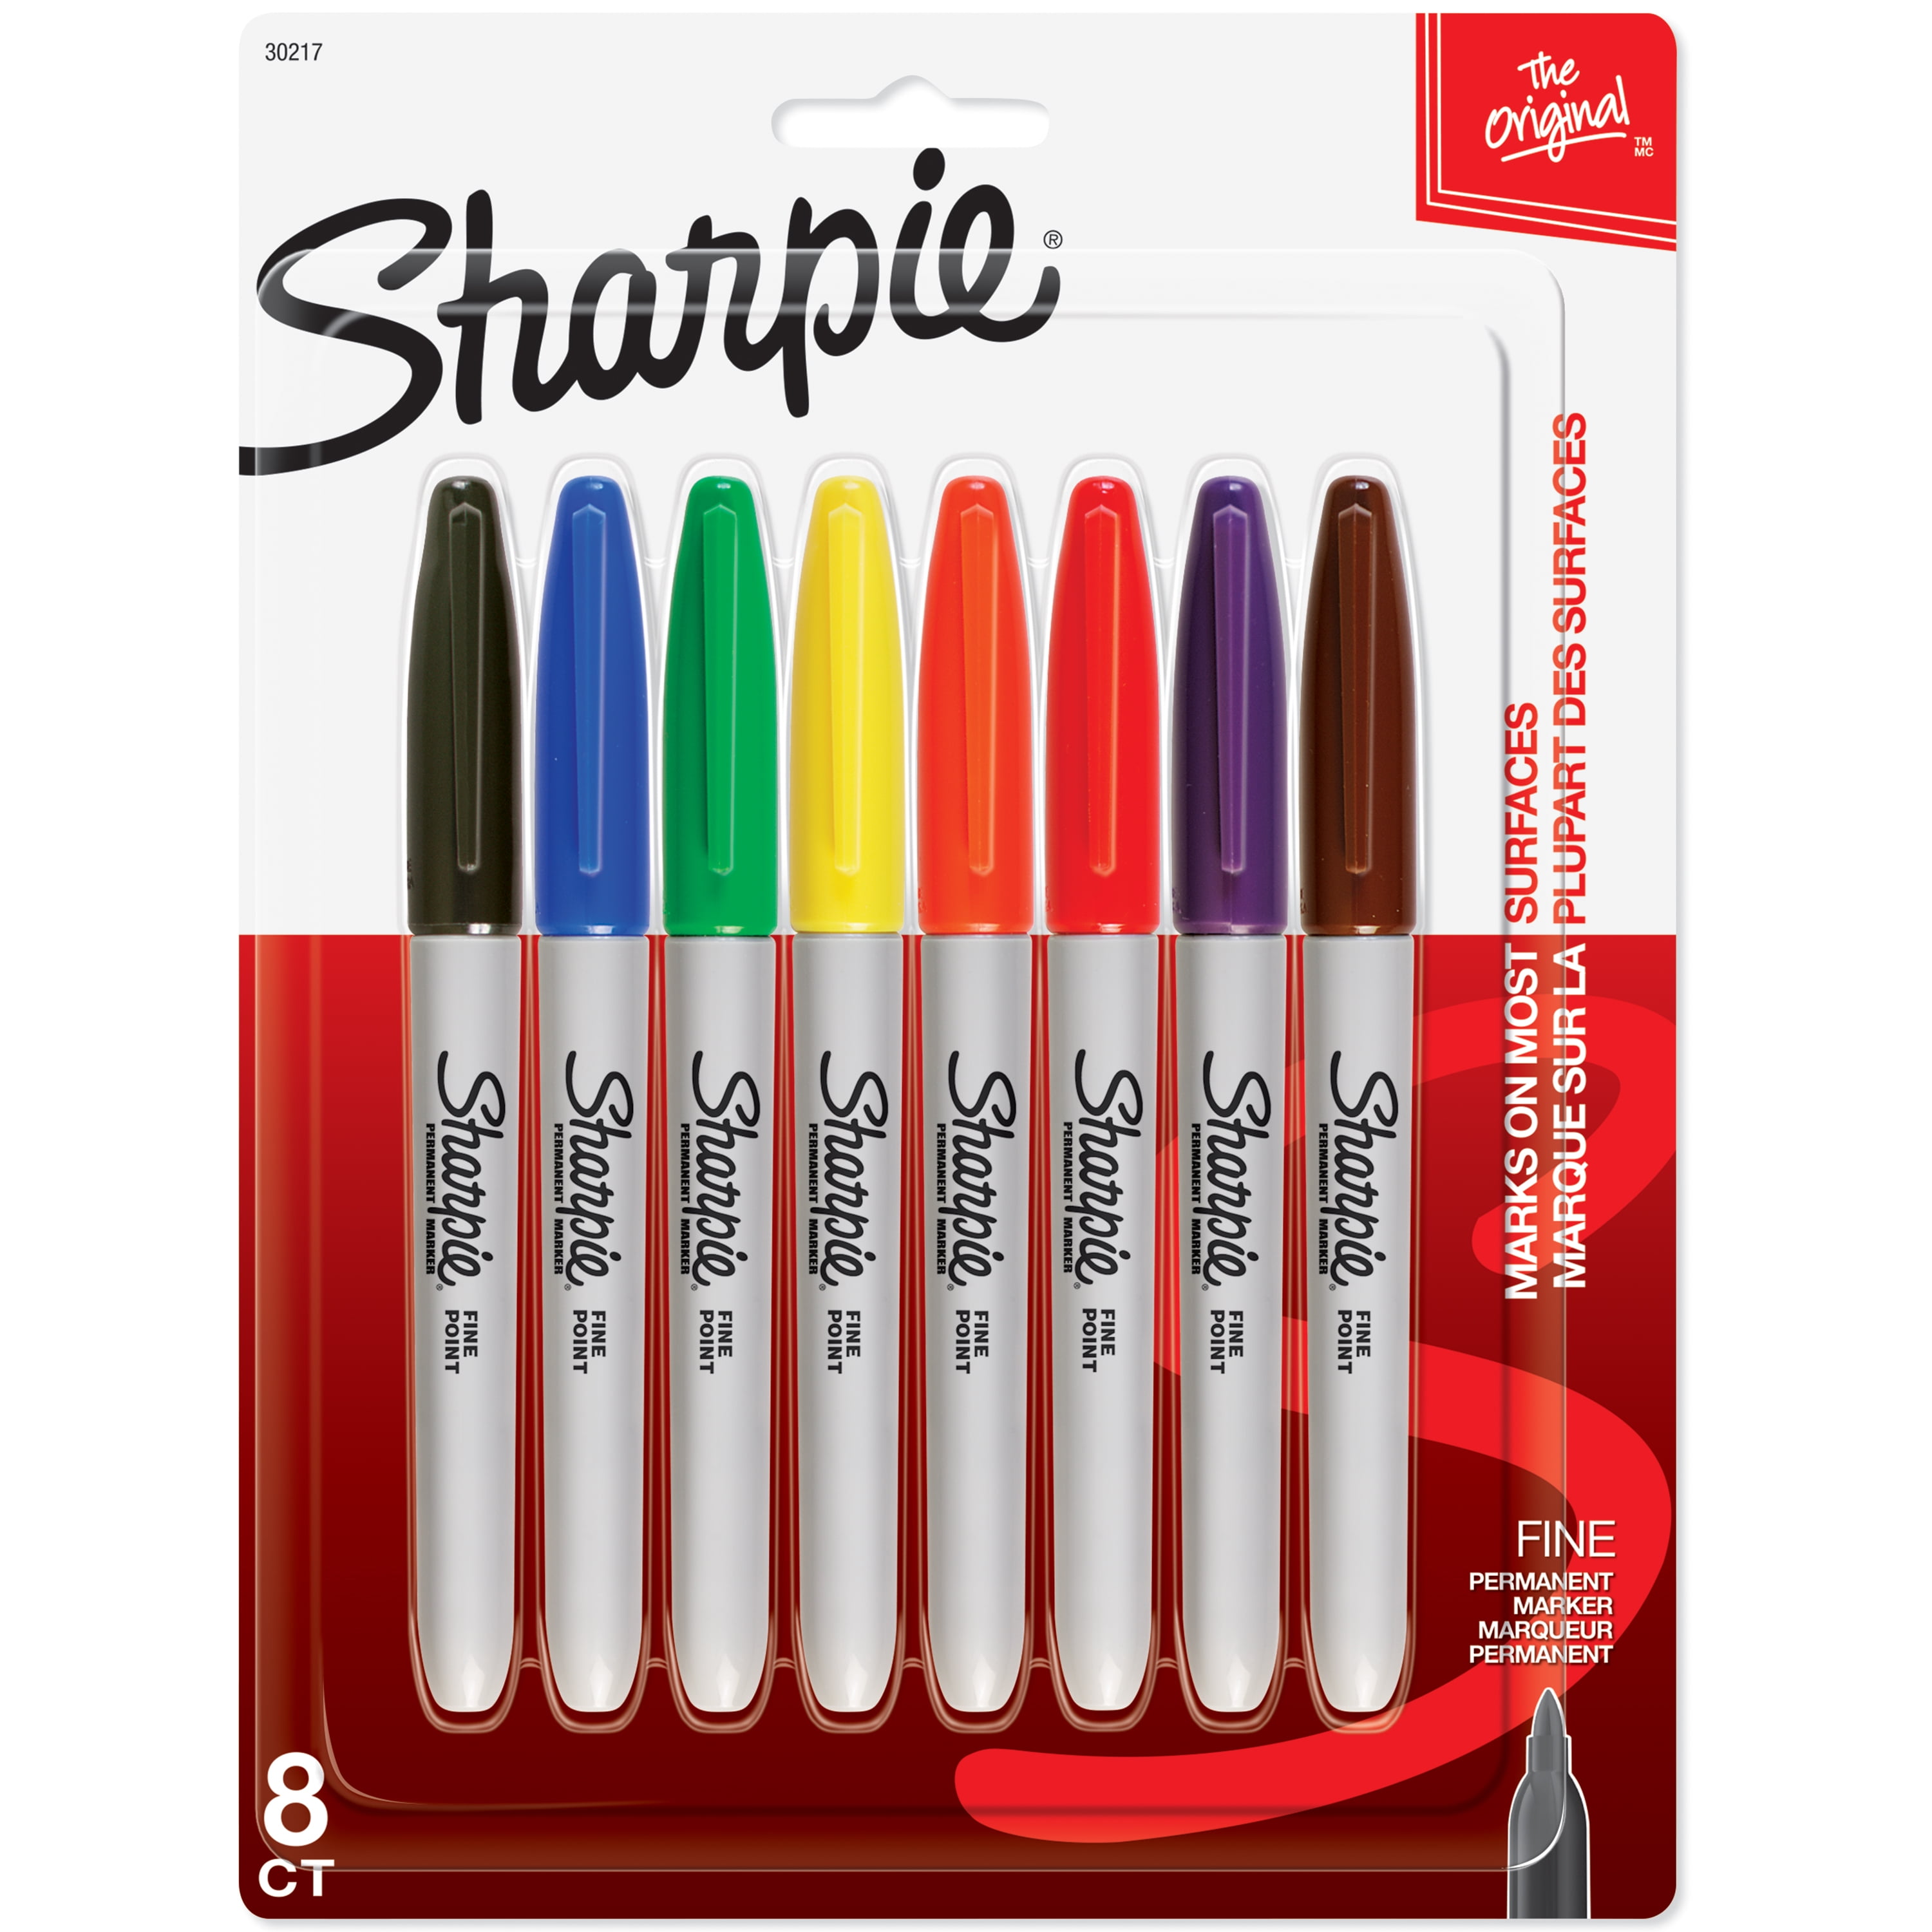 Choose Sharpie Fine Point Permanent Neon Assorted Colors Single Marker Pen 